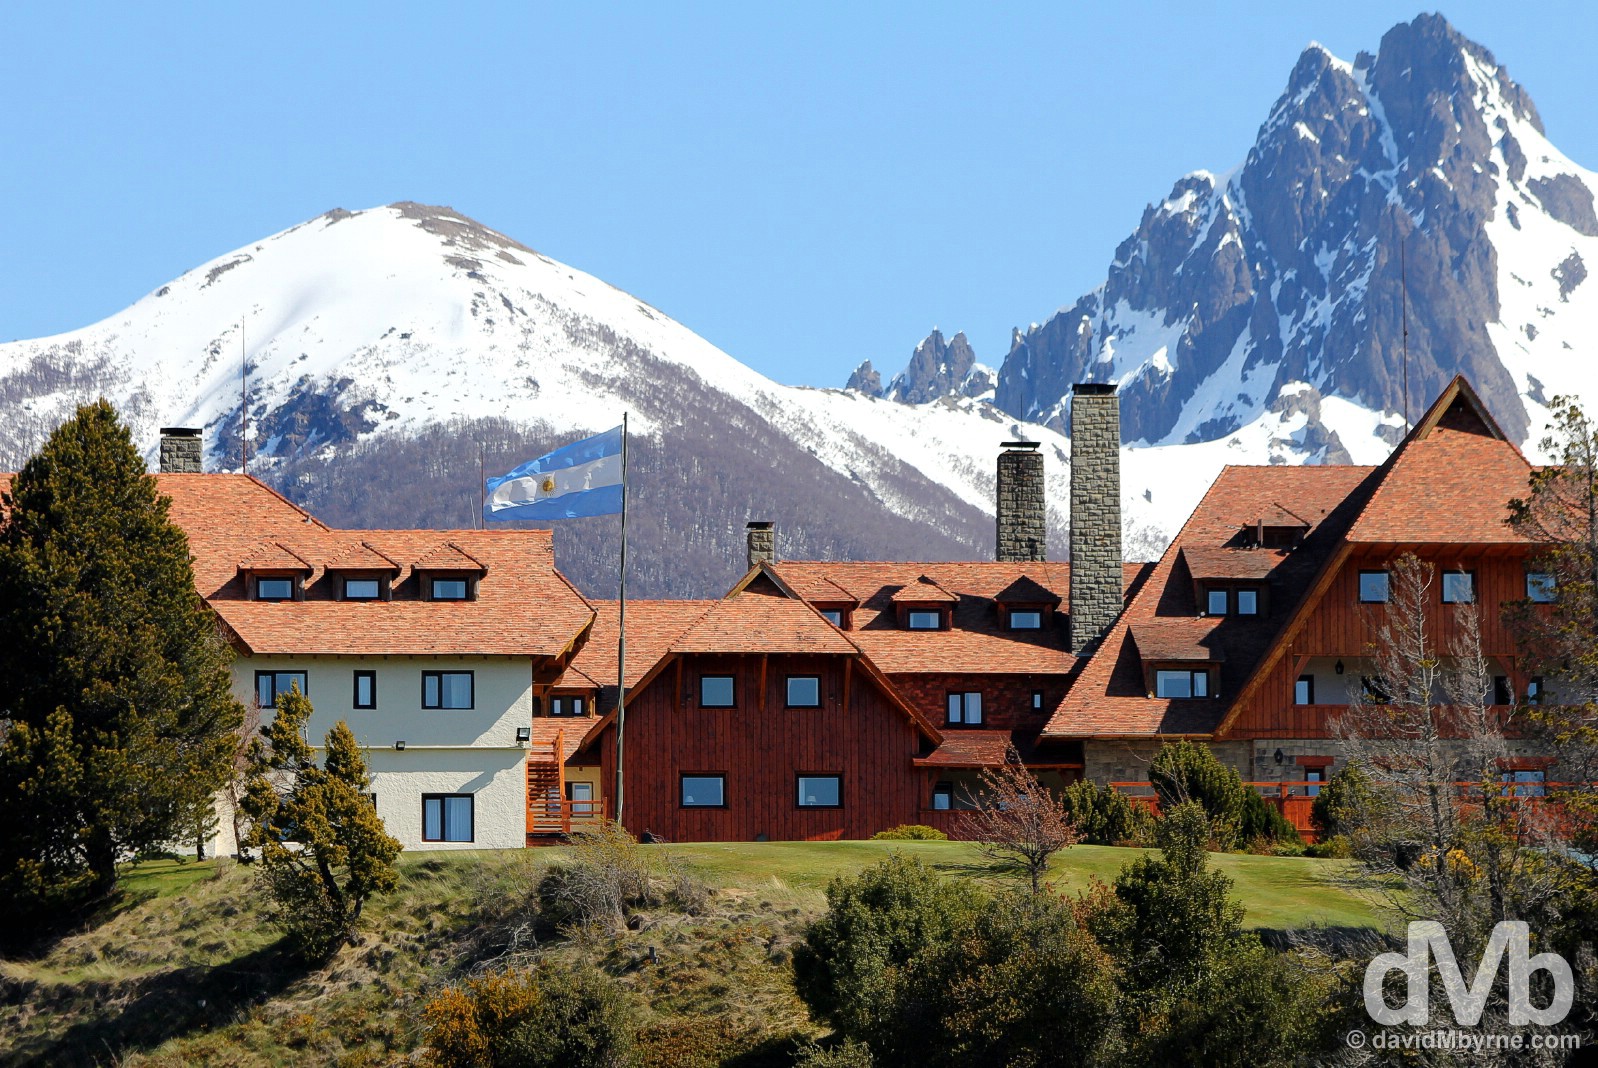 The Llao Llao Hotel in Patagonia, Argentina. October 18, 2015.